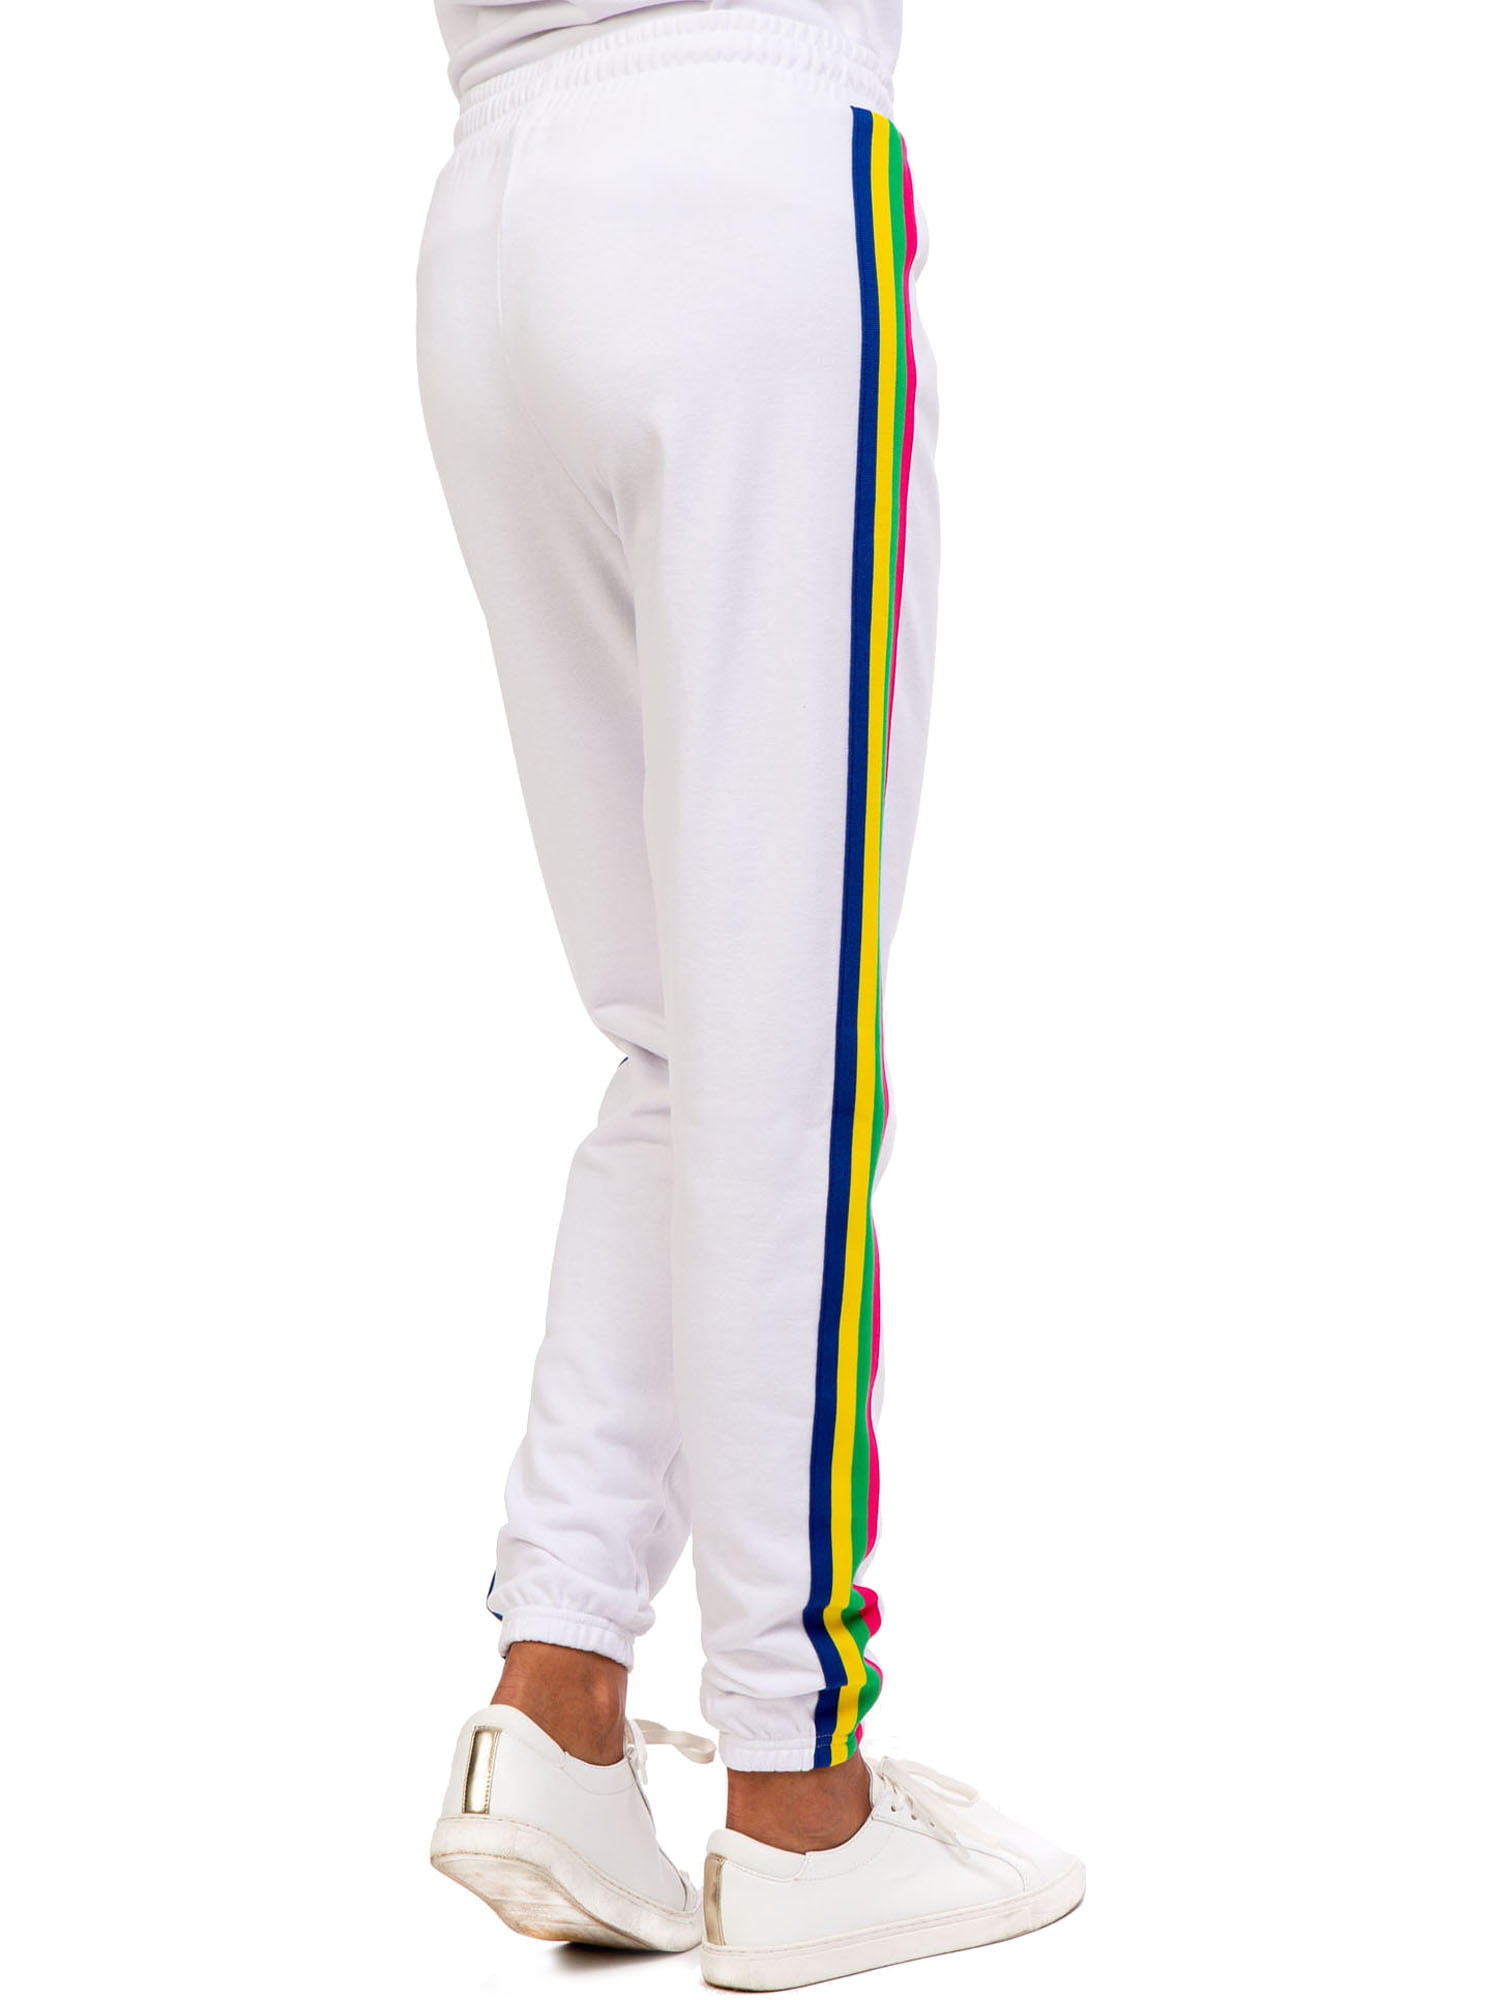 U.S. Polo Assn Sweatpants Women's 3XL (22) Rainbow Side Stripe Navy NEW